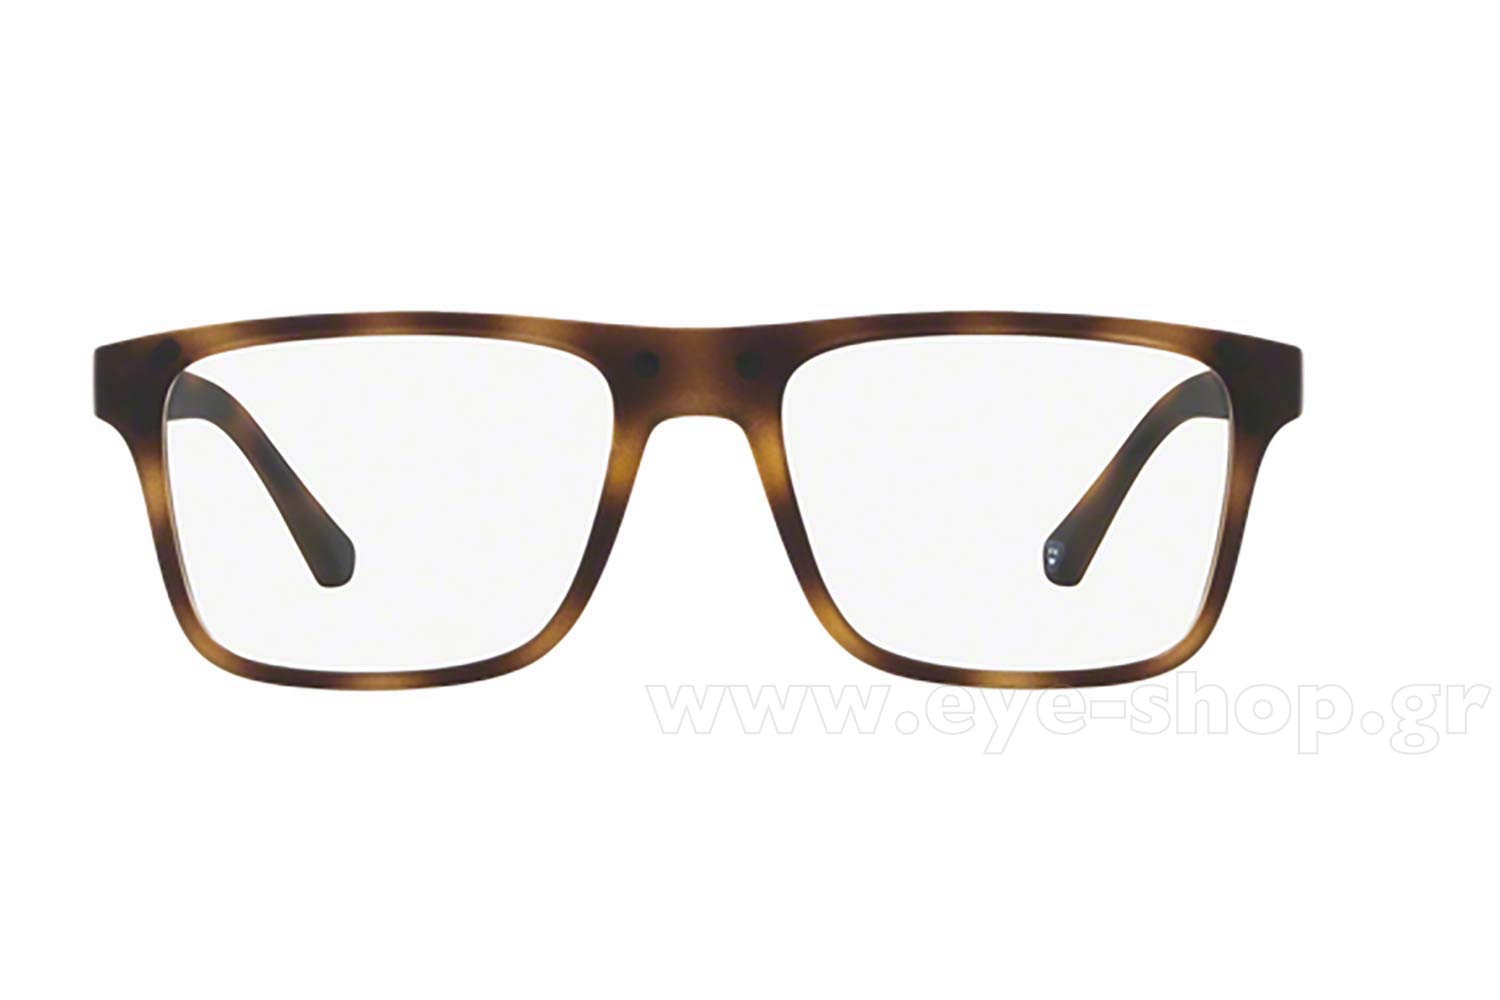 Emporio Armani Magnetic Sunglasses Deals, 53% OFF 